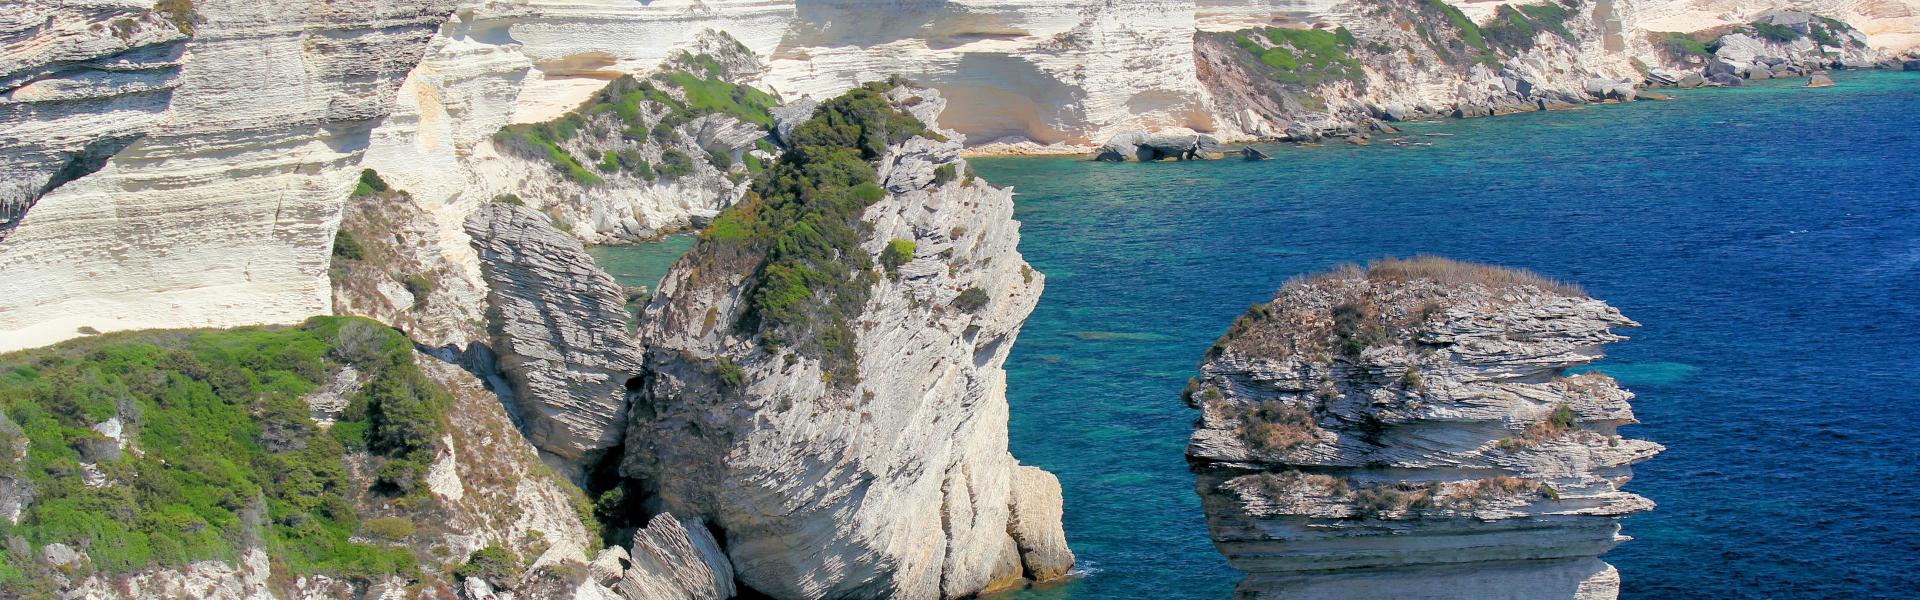 Location de vacances à Zilia - Haute-Corse - Amivac